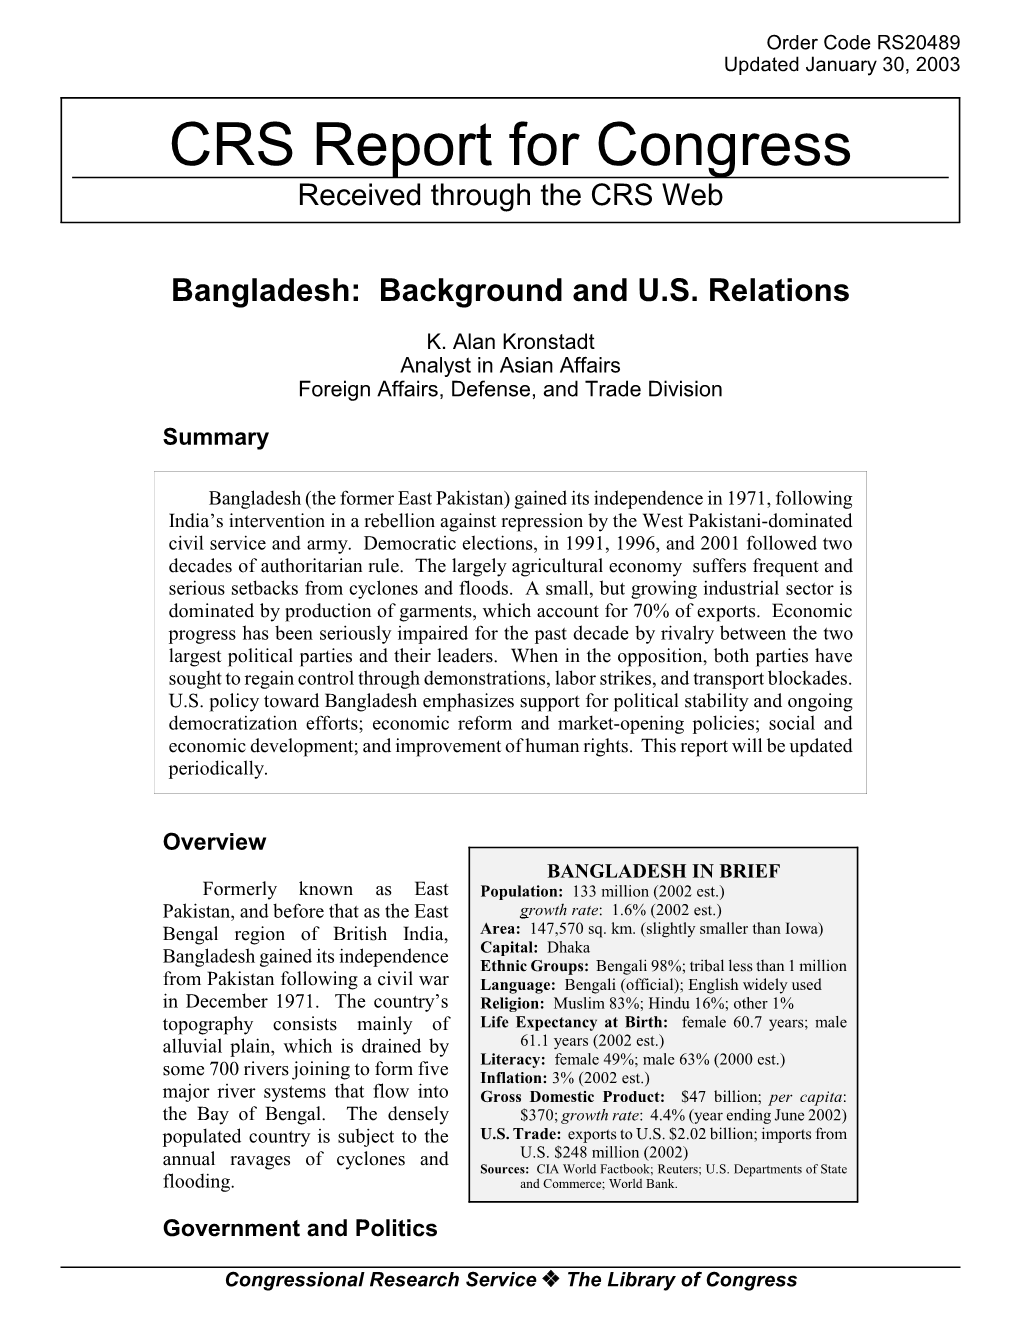 Bangladesh: Background and U.S. Relations